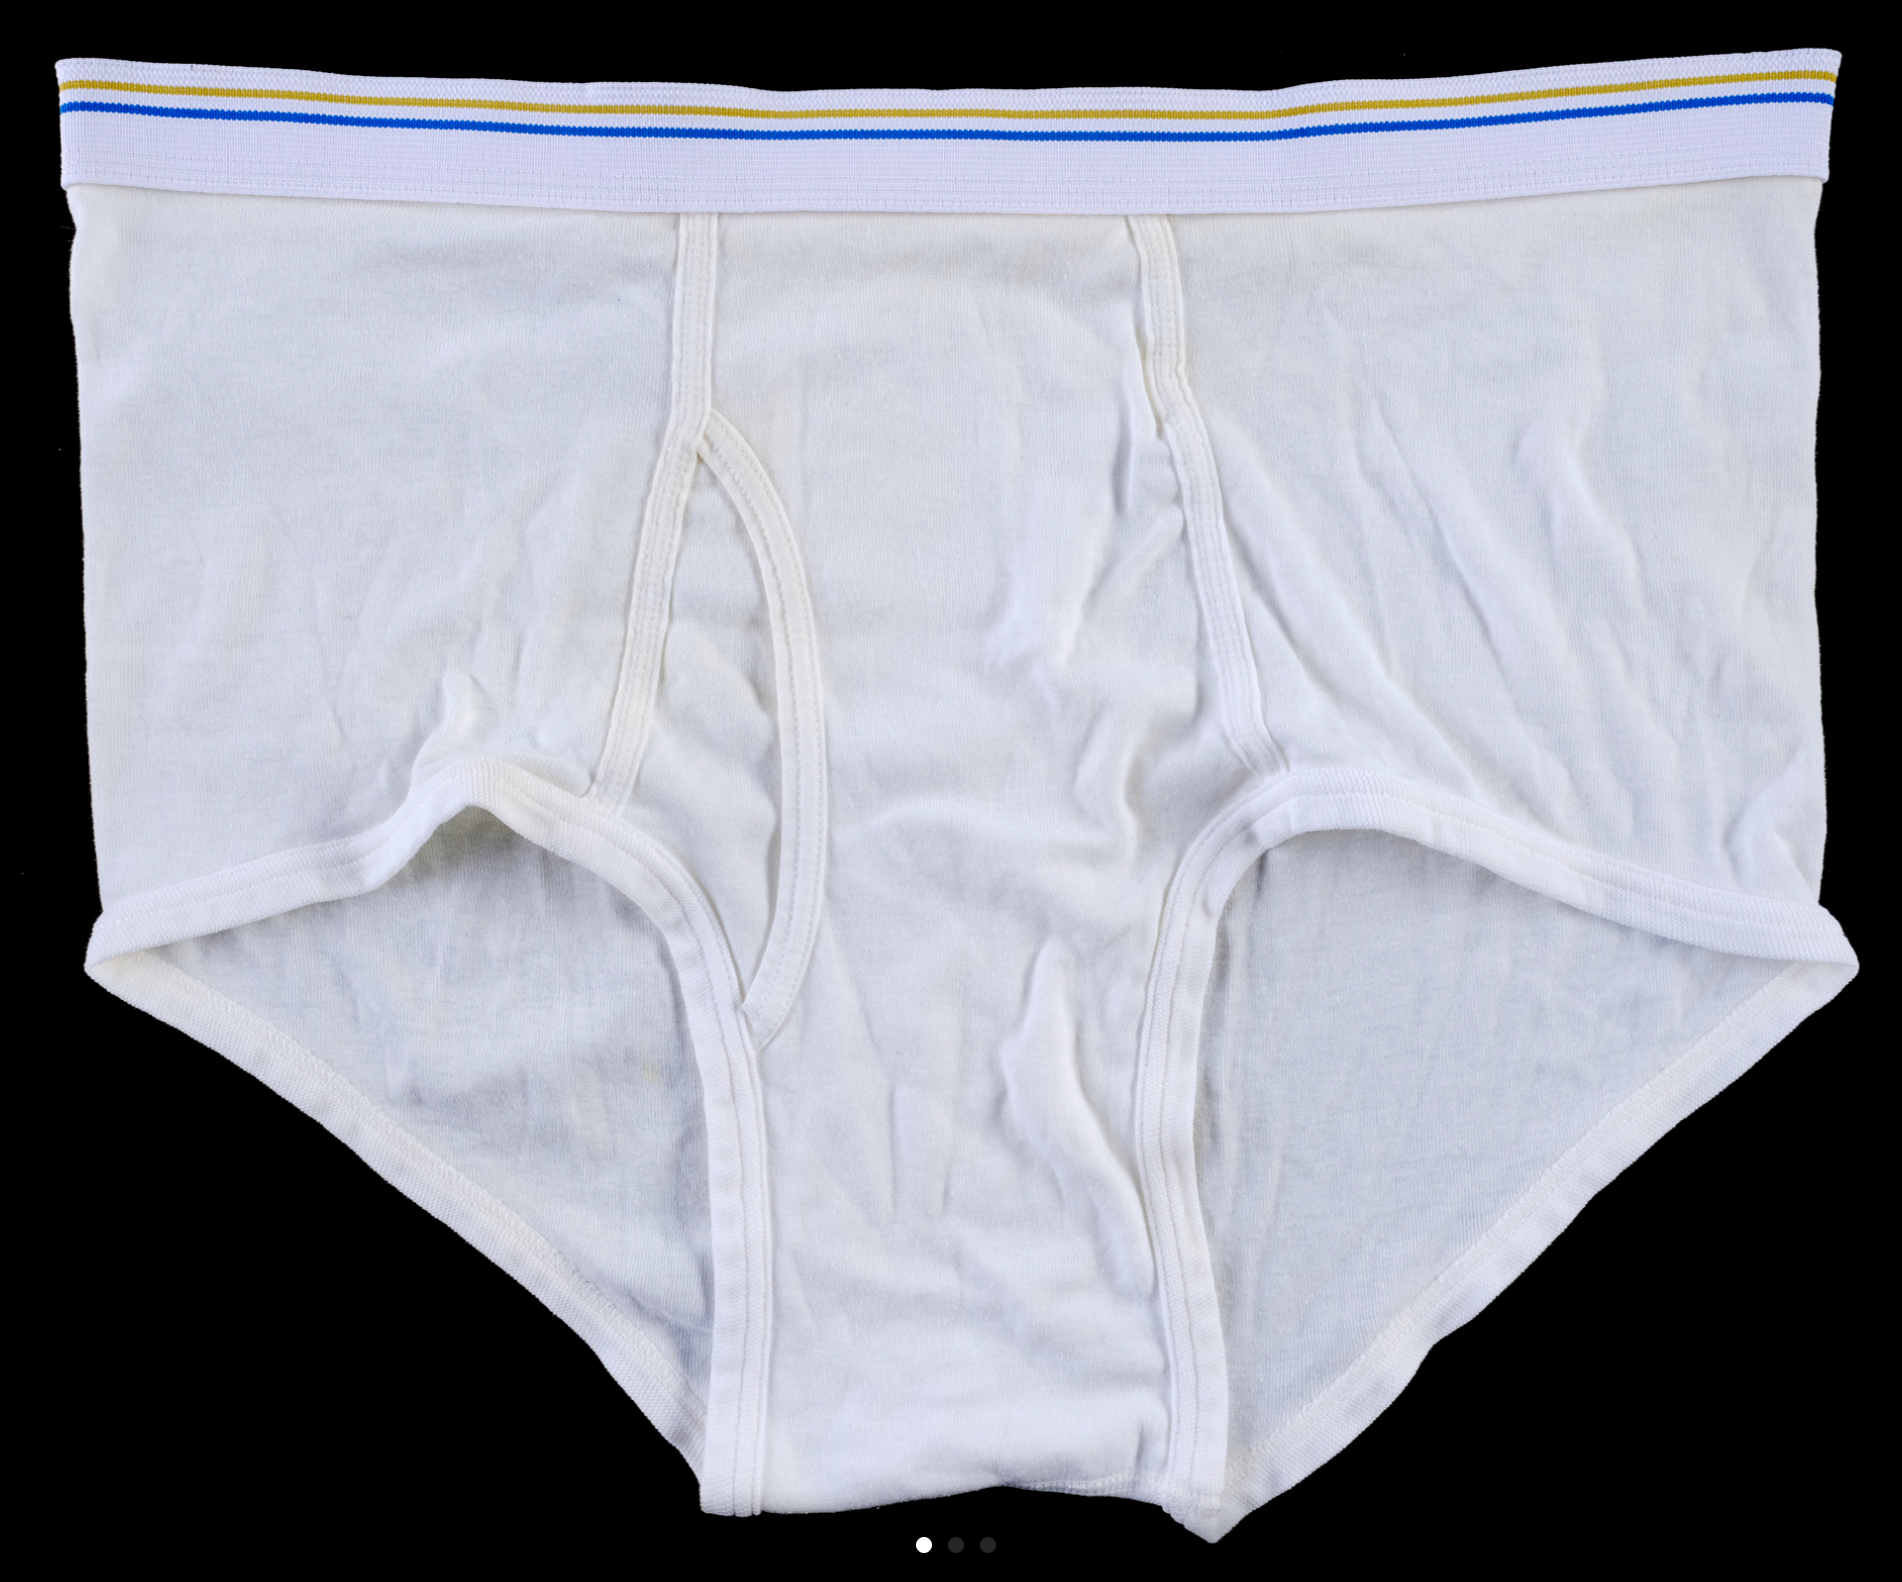 Walter White's auction underwear from Breaking Bad